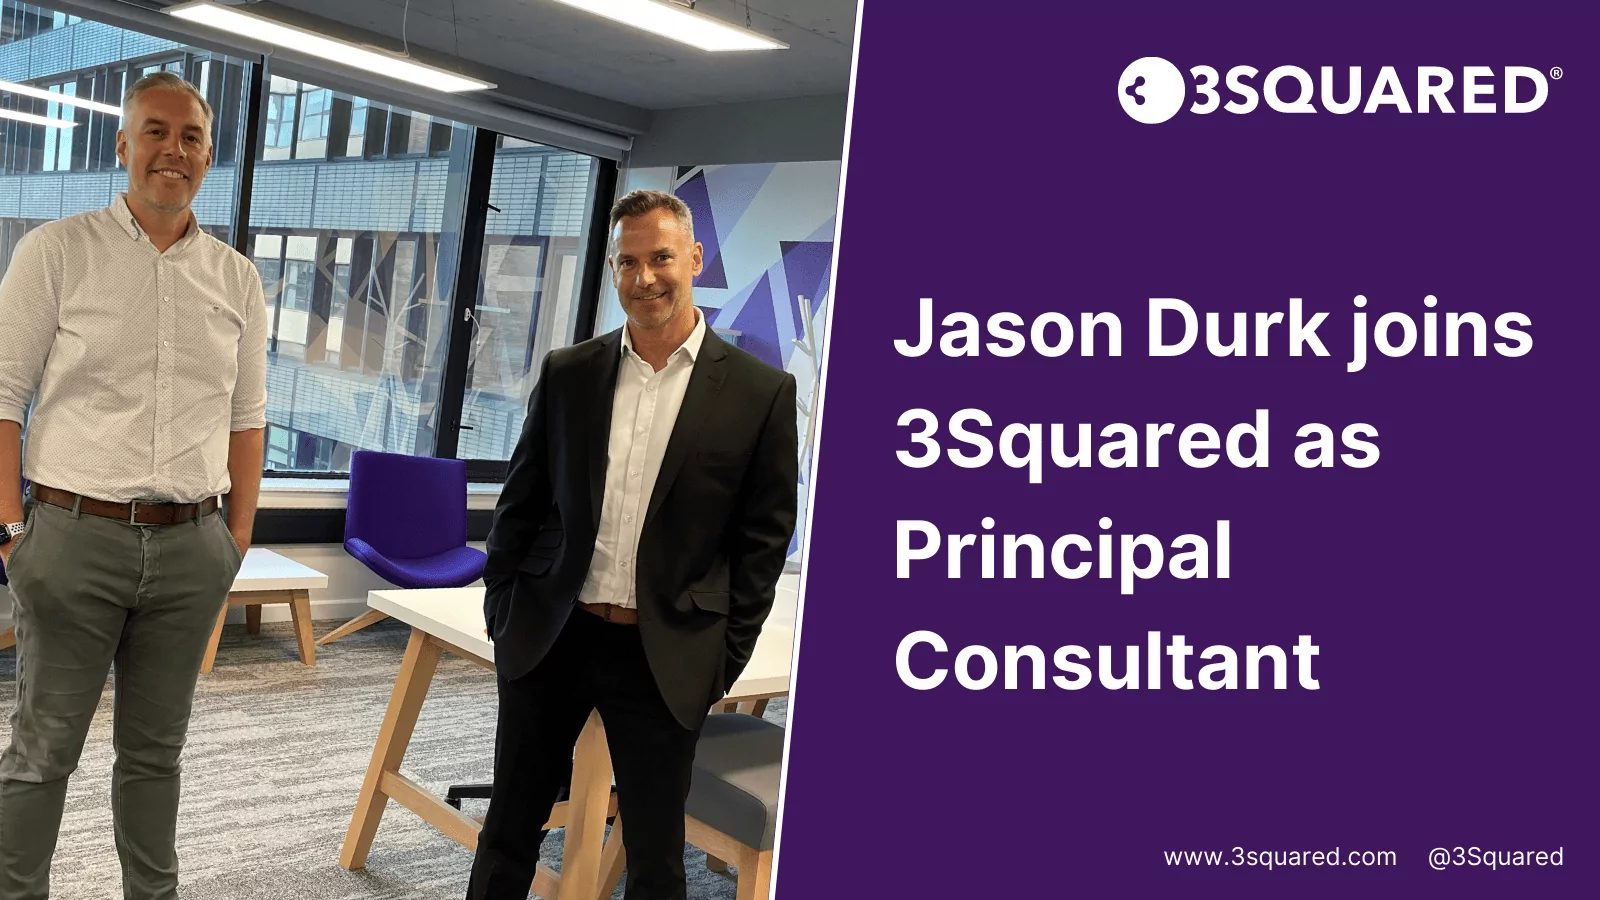 Jason Durk, Principal Consultant